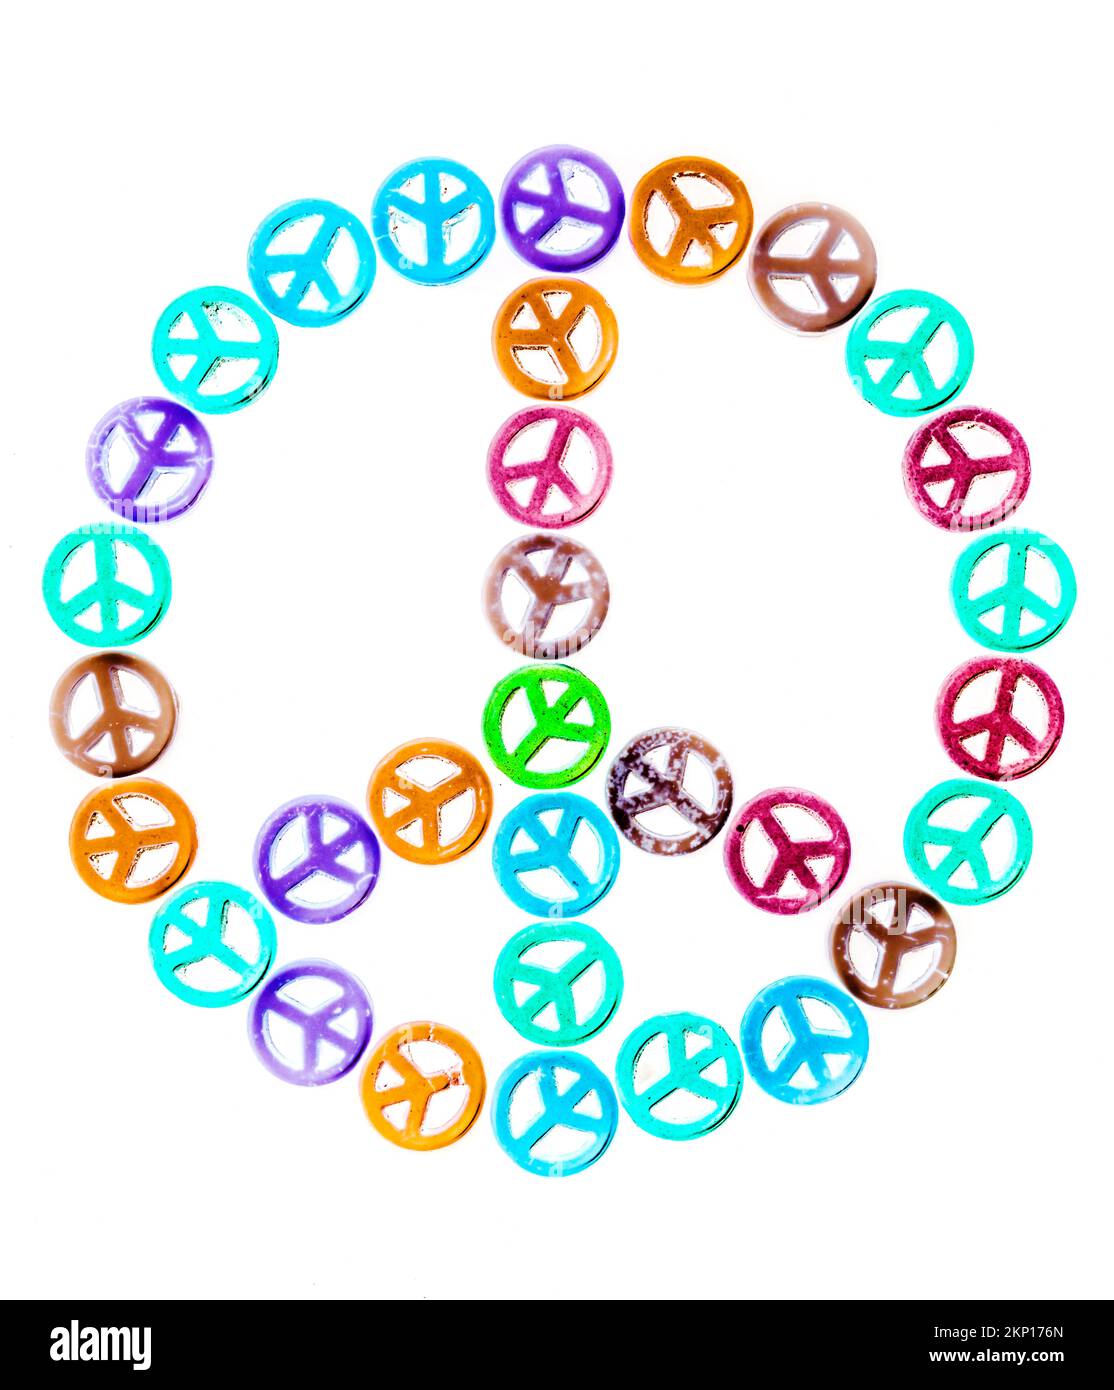 Bohemian stylised antiwar symbology with patterns of peace united on white Stock Photo